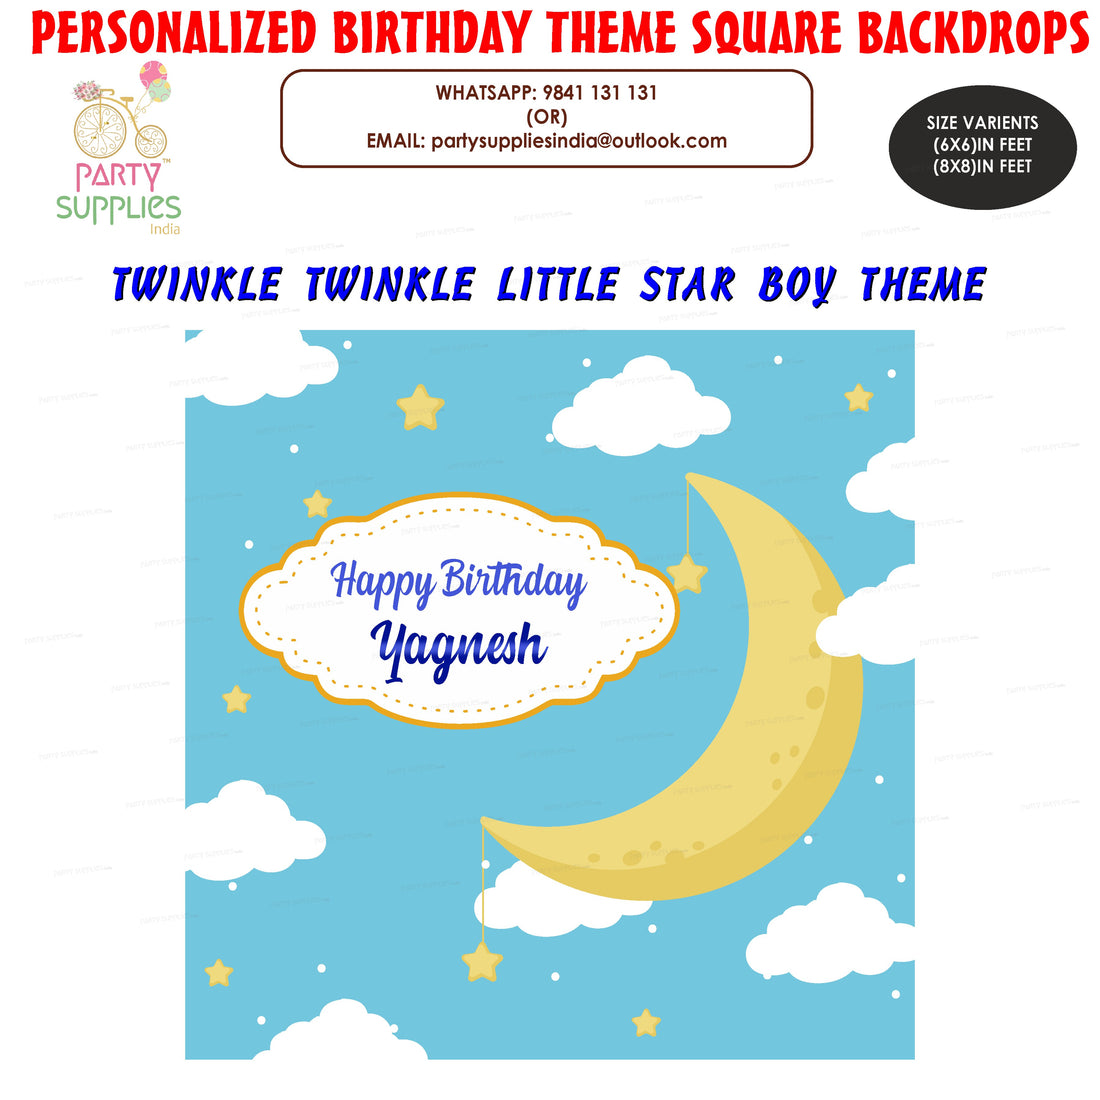 PSI Twinkle Twinkle Little Star Boy Theme Customized Square Backdrop